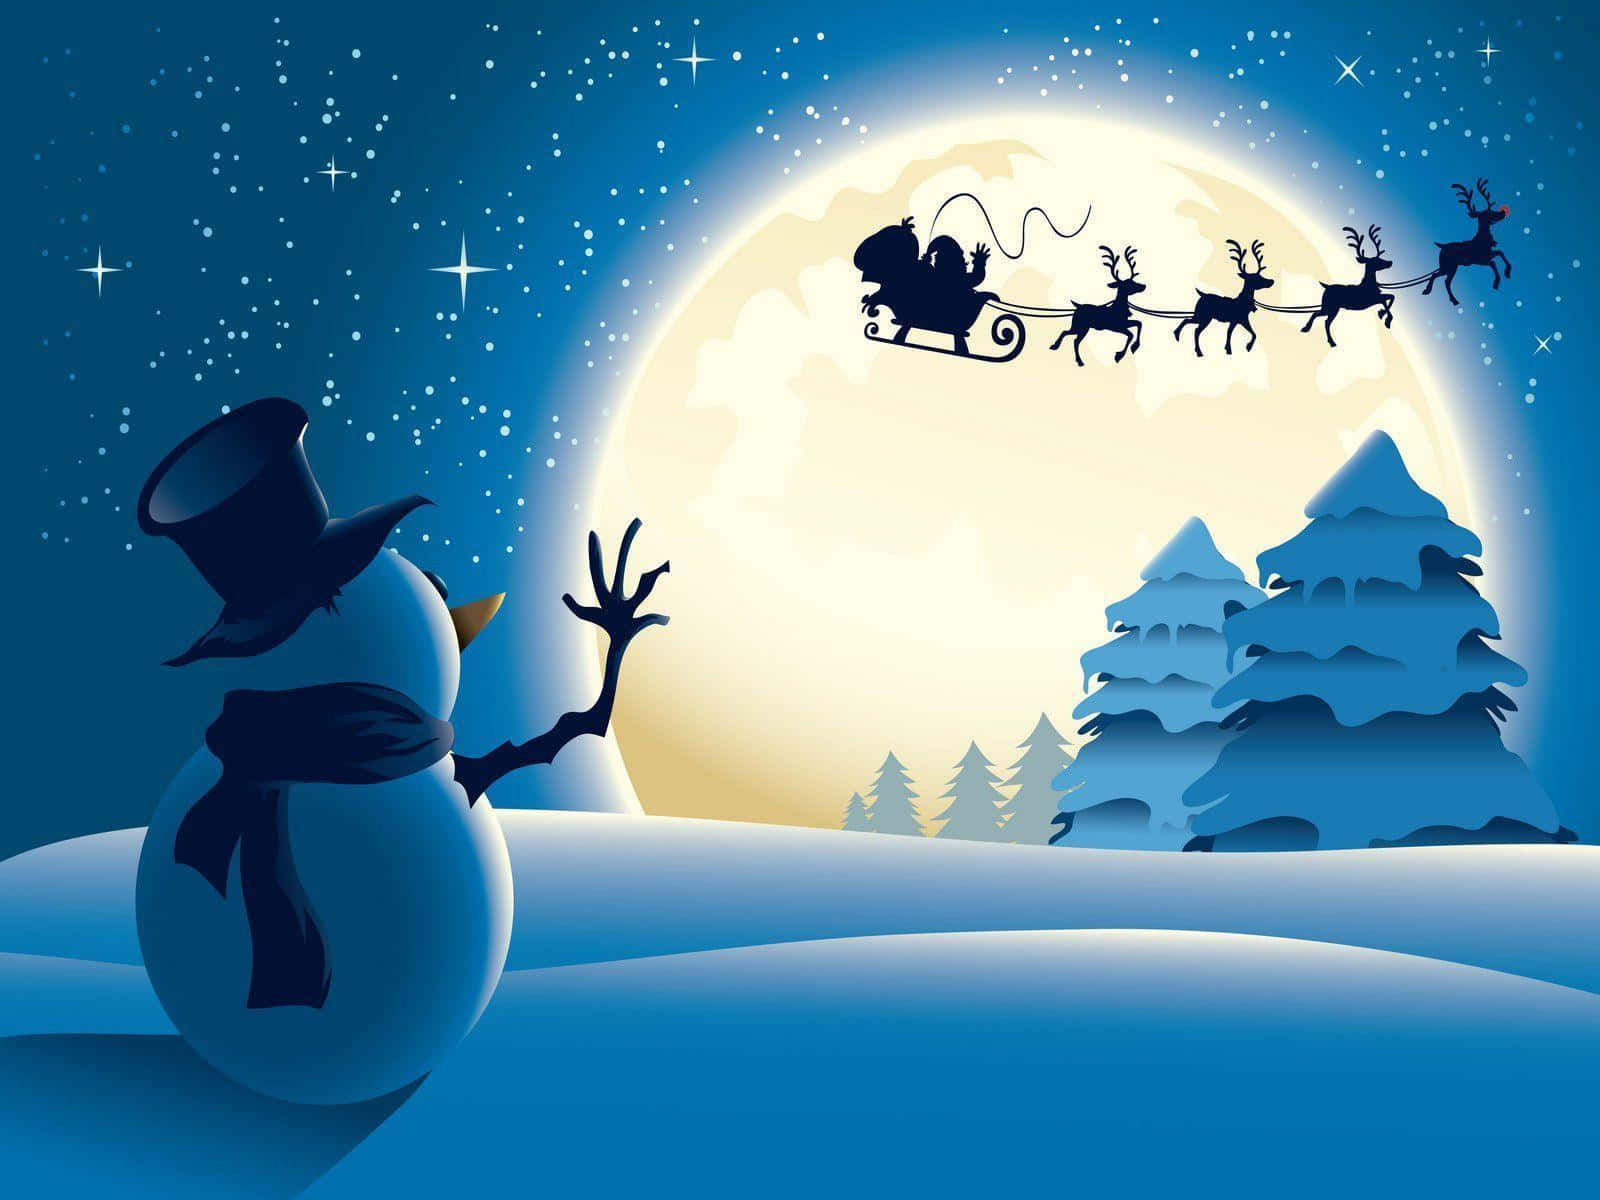 Cool Christmas Eve Santa Claus Snowman Sculpture Wallpaper